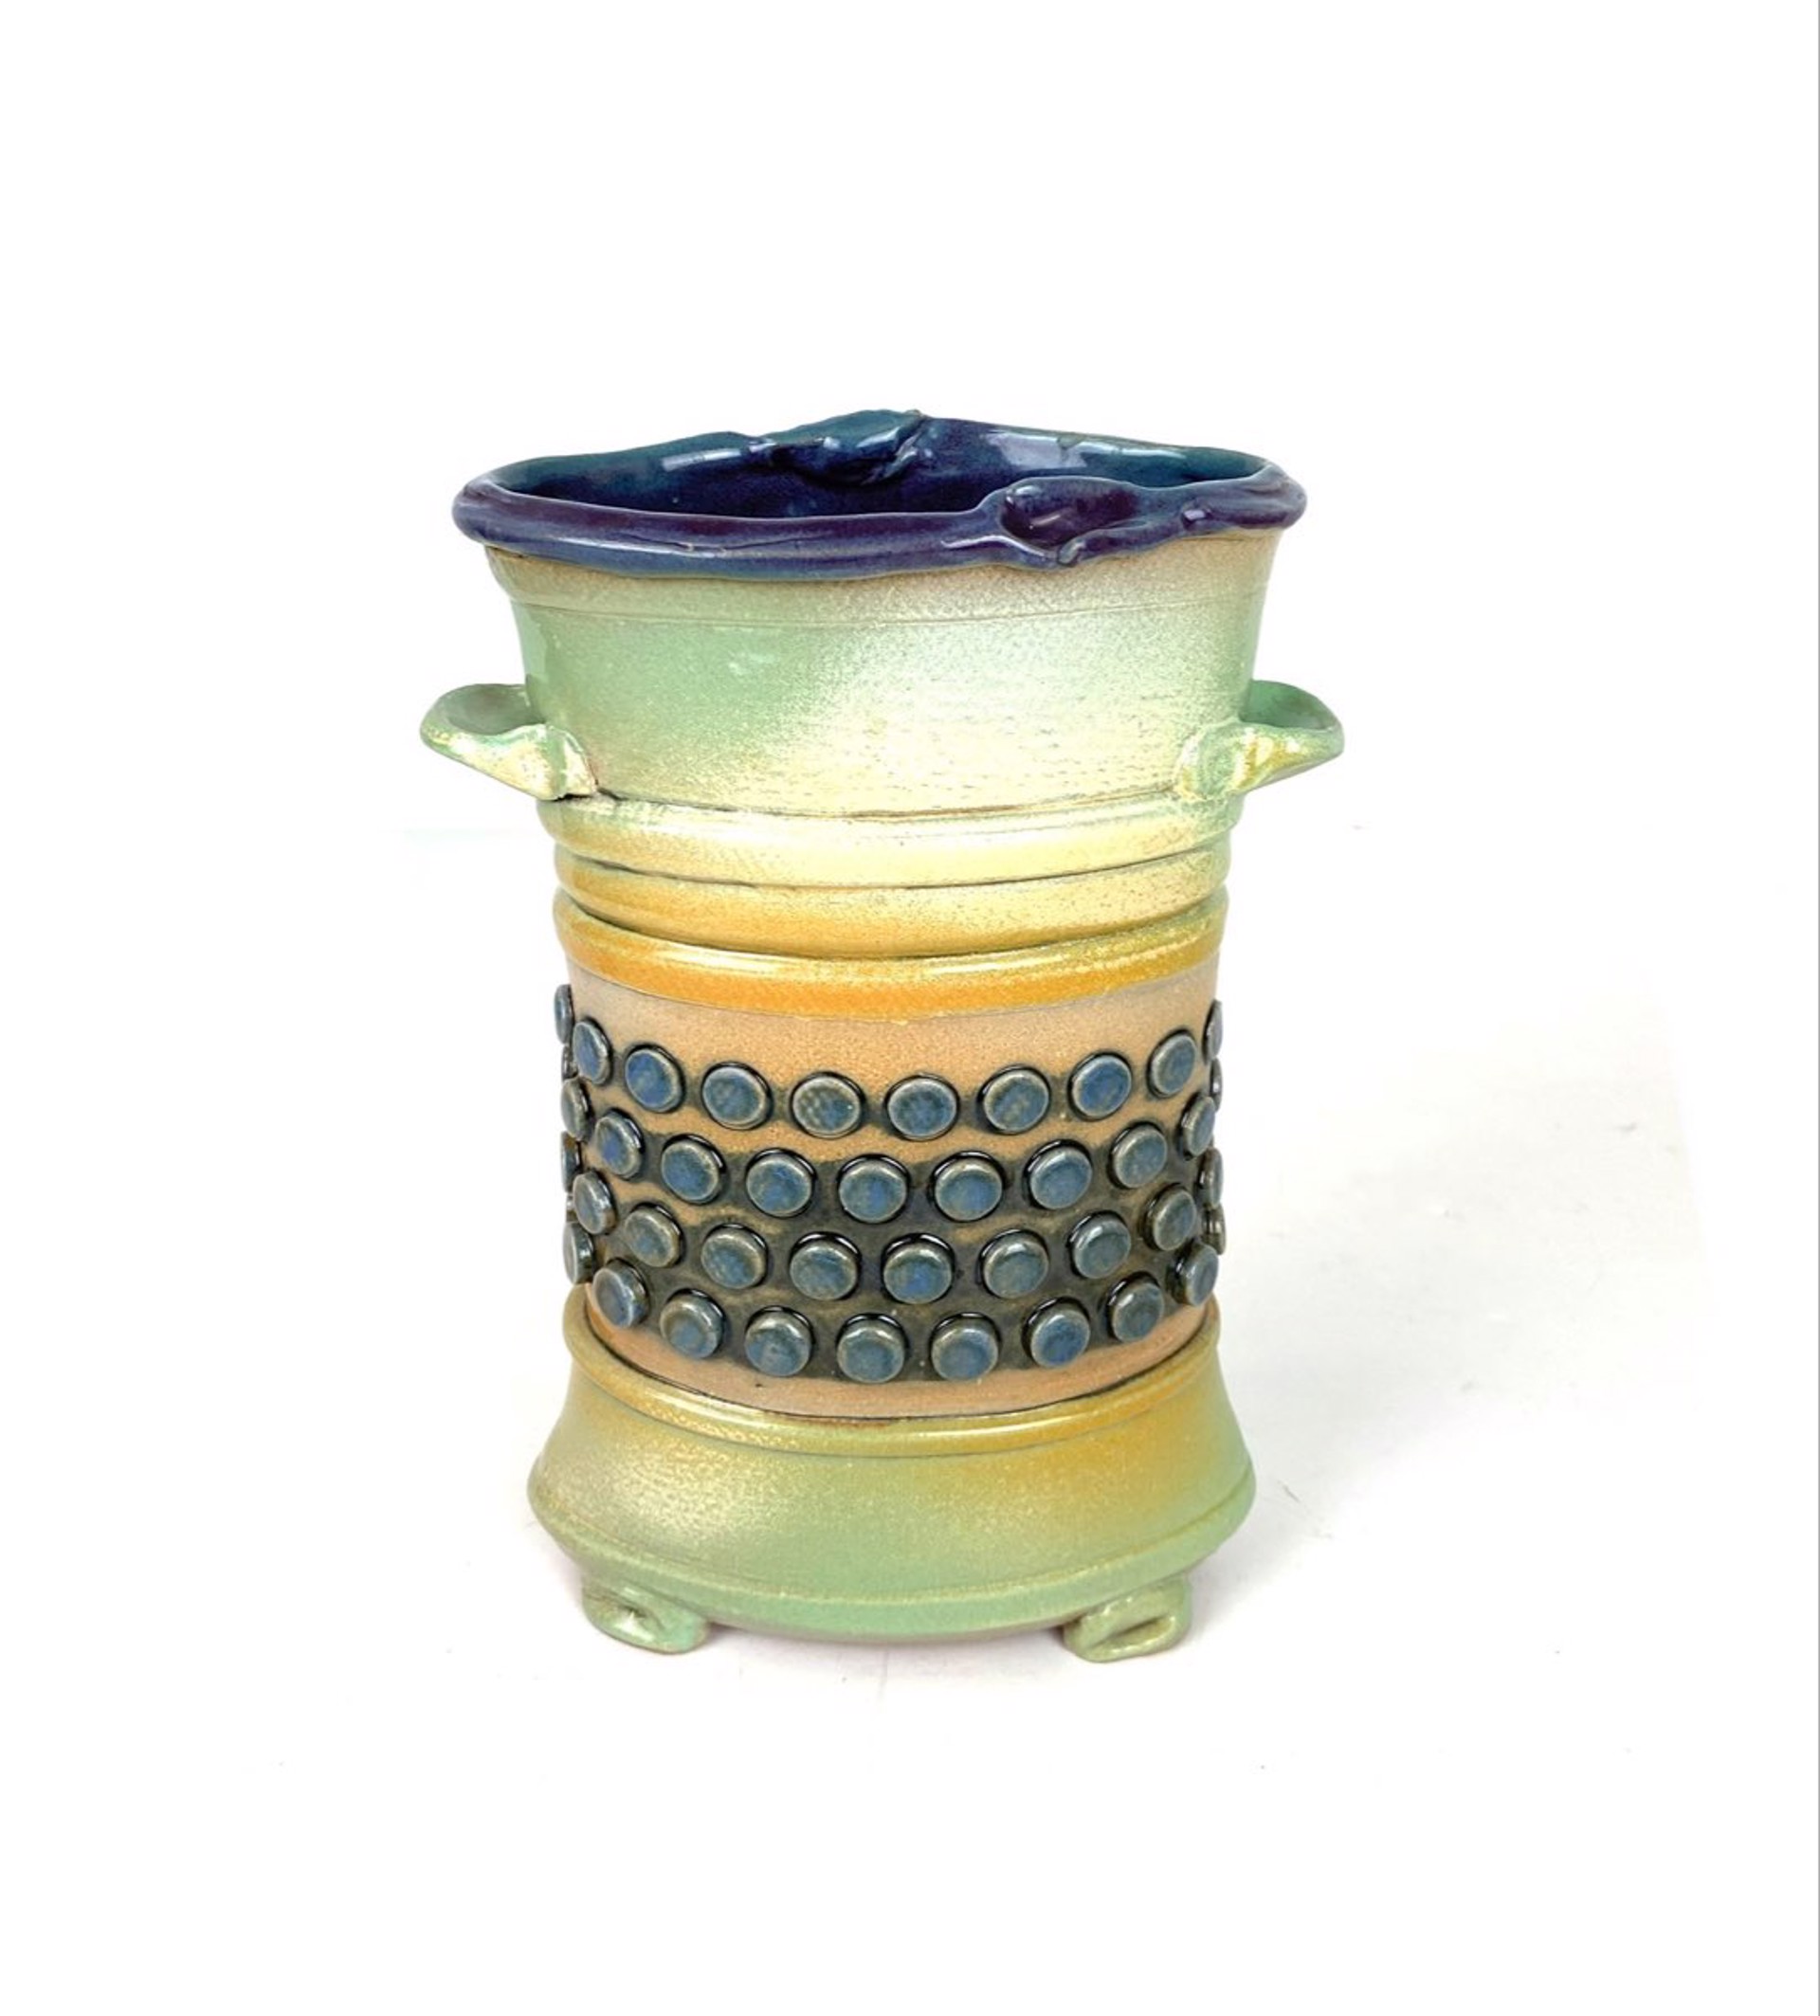 Vase by Sandy Blain